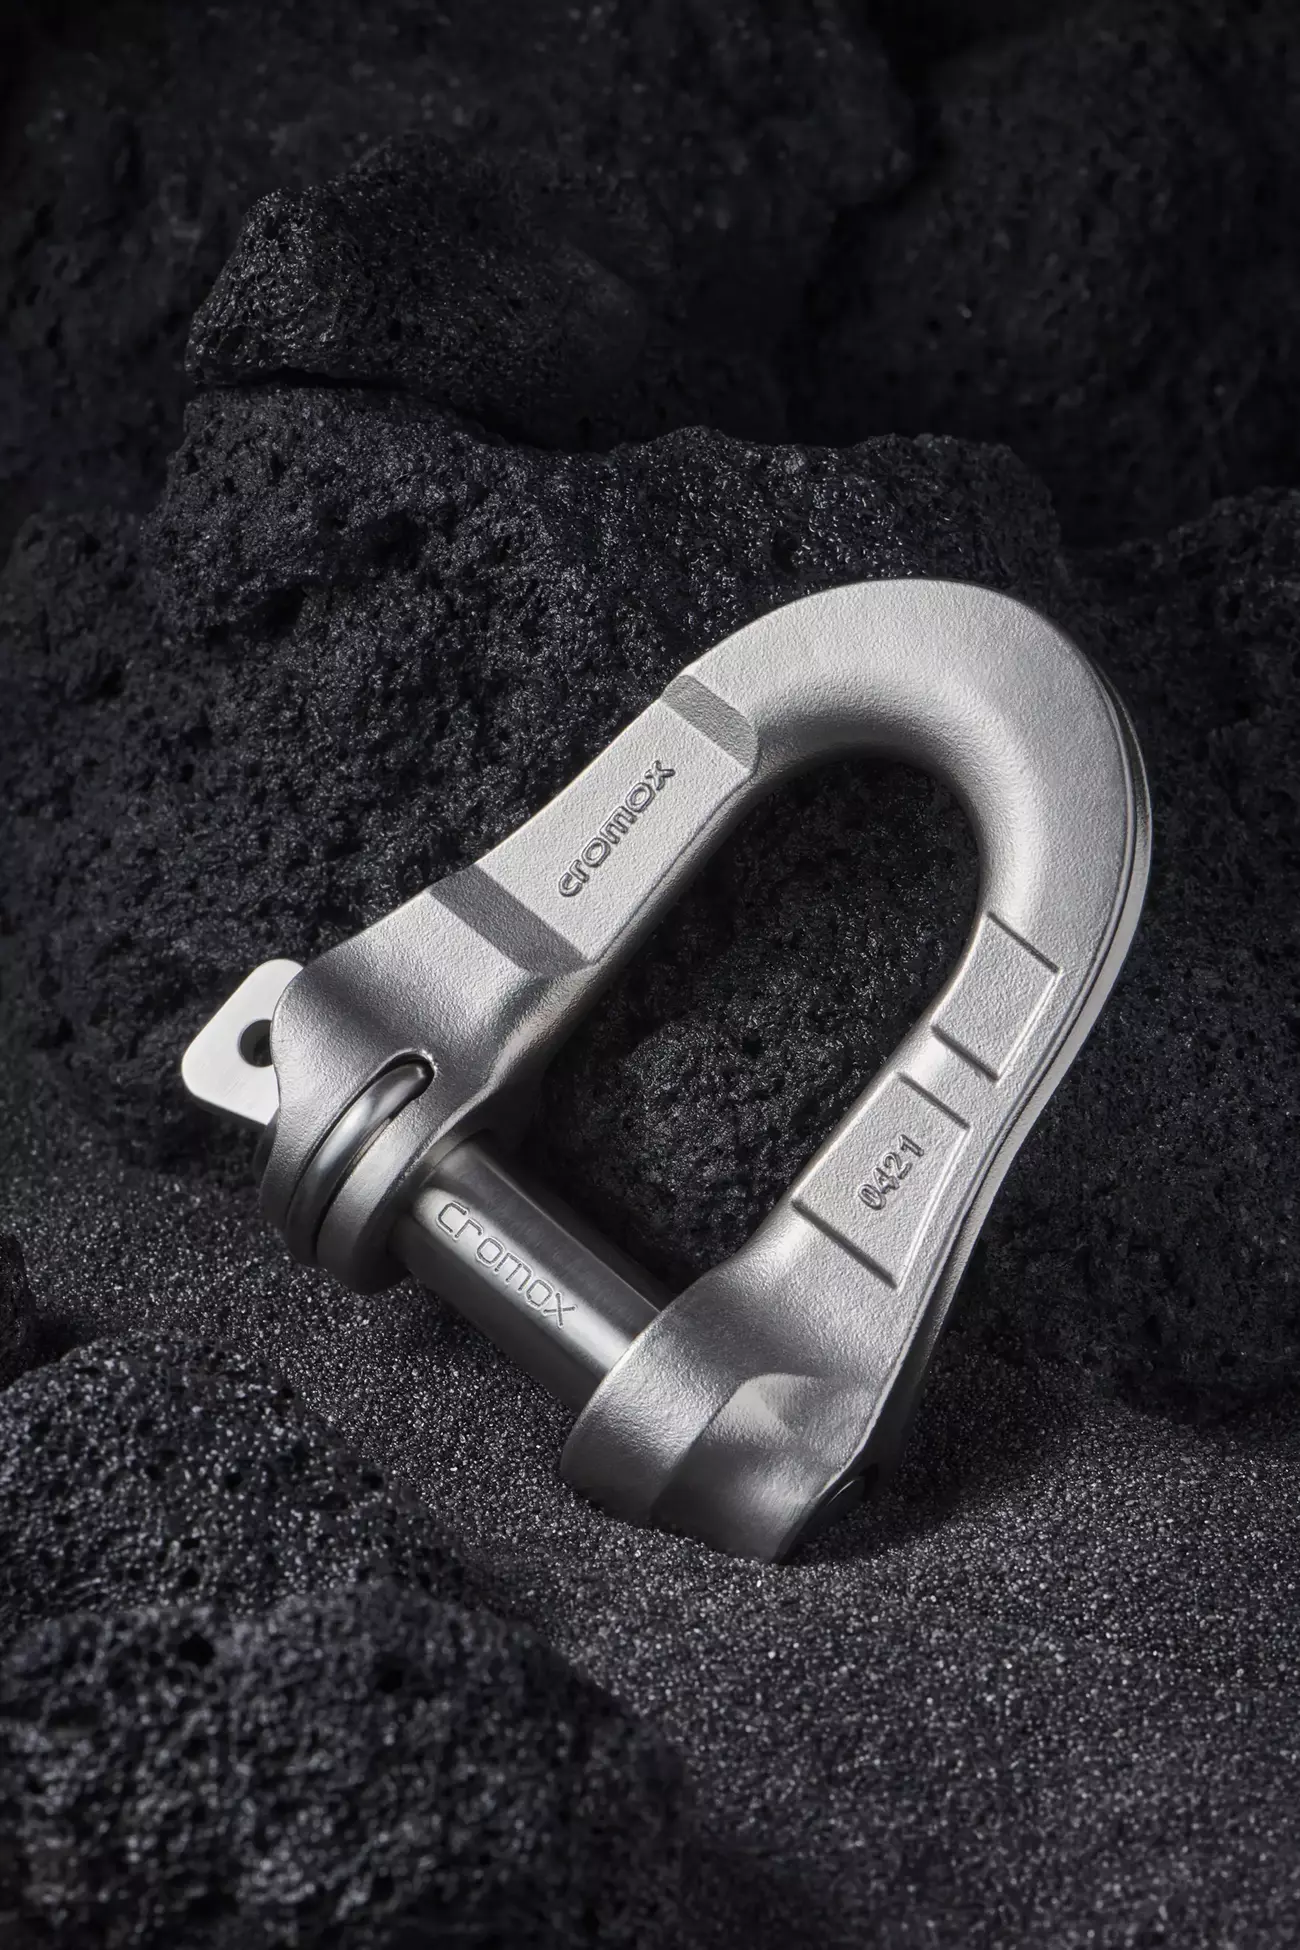 cromox® stainless steel shackle